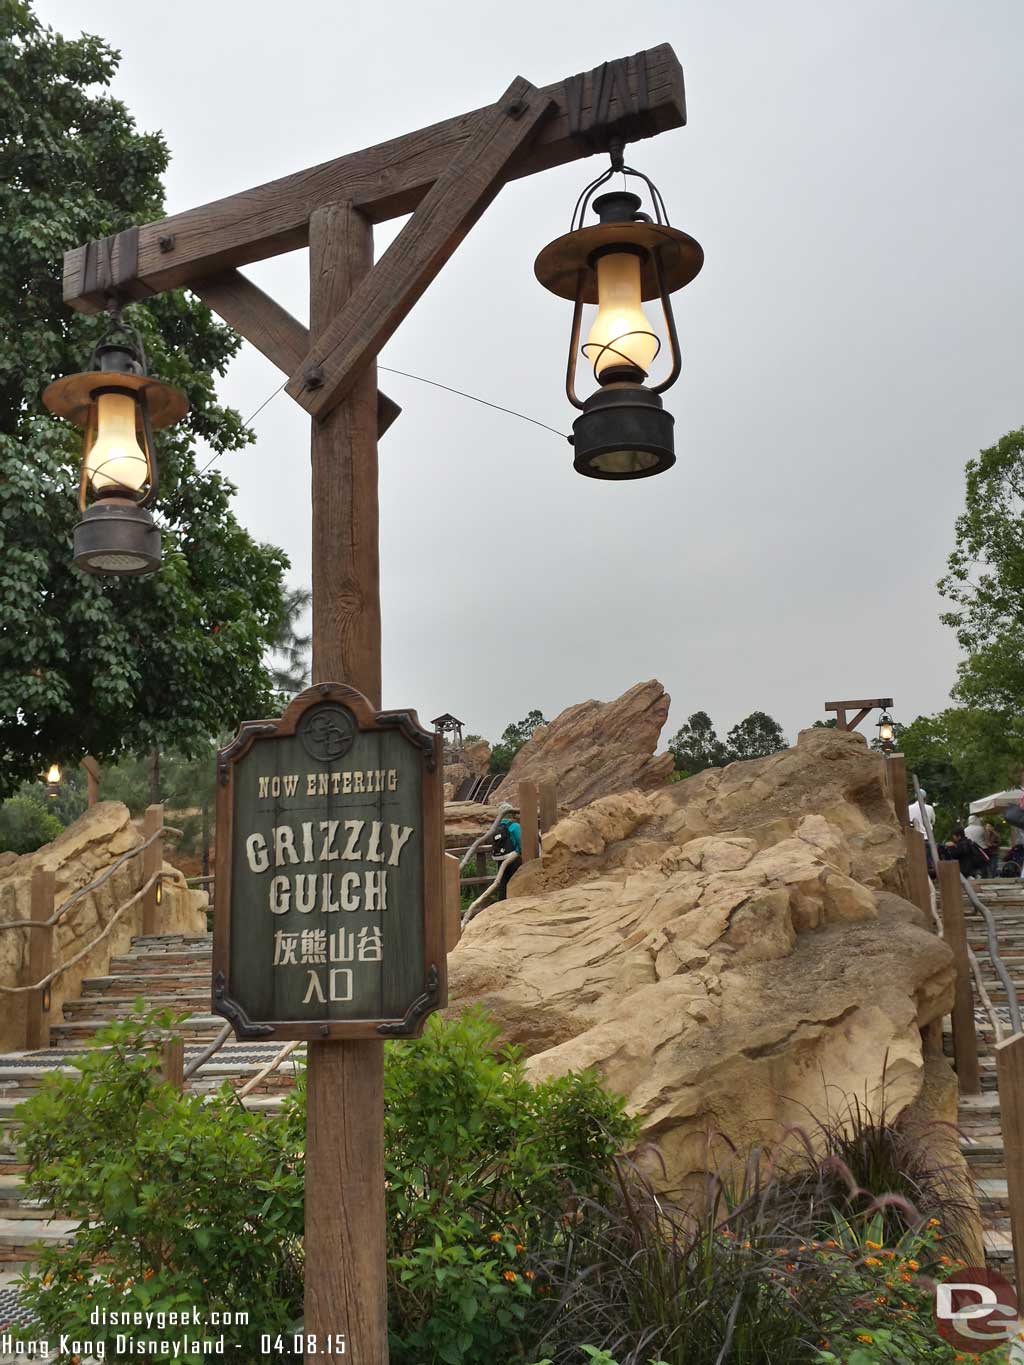 Hong Kong Disneyland - Grizzly Gulch